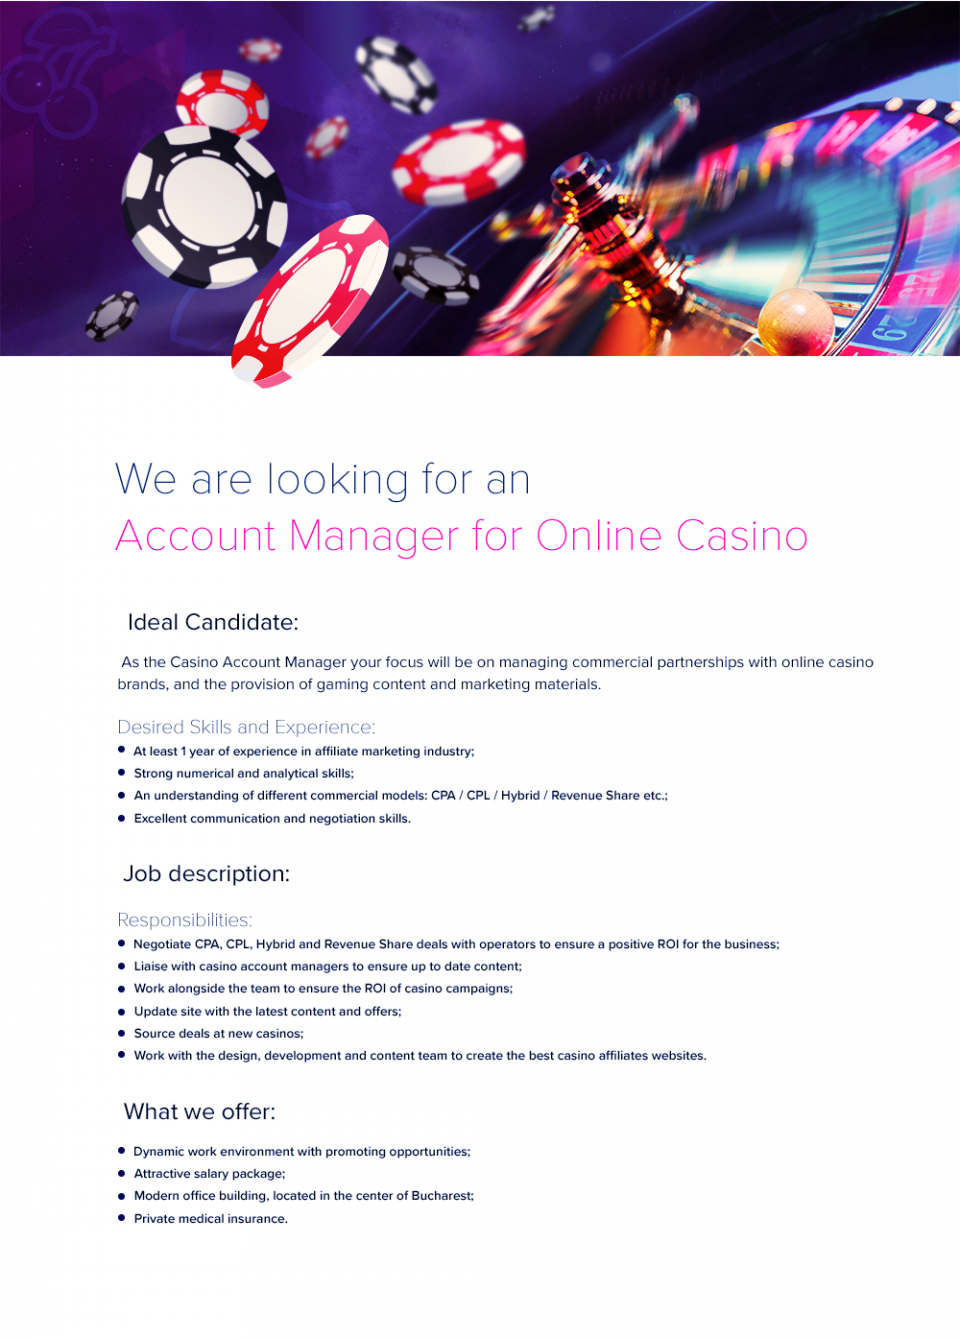 Online casino customer service job description responsibilities